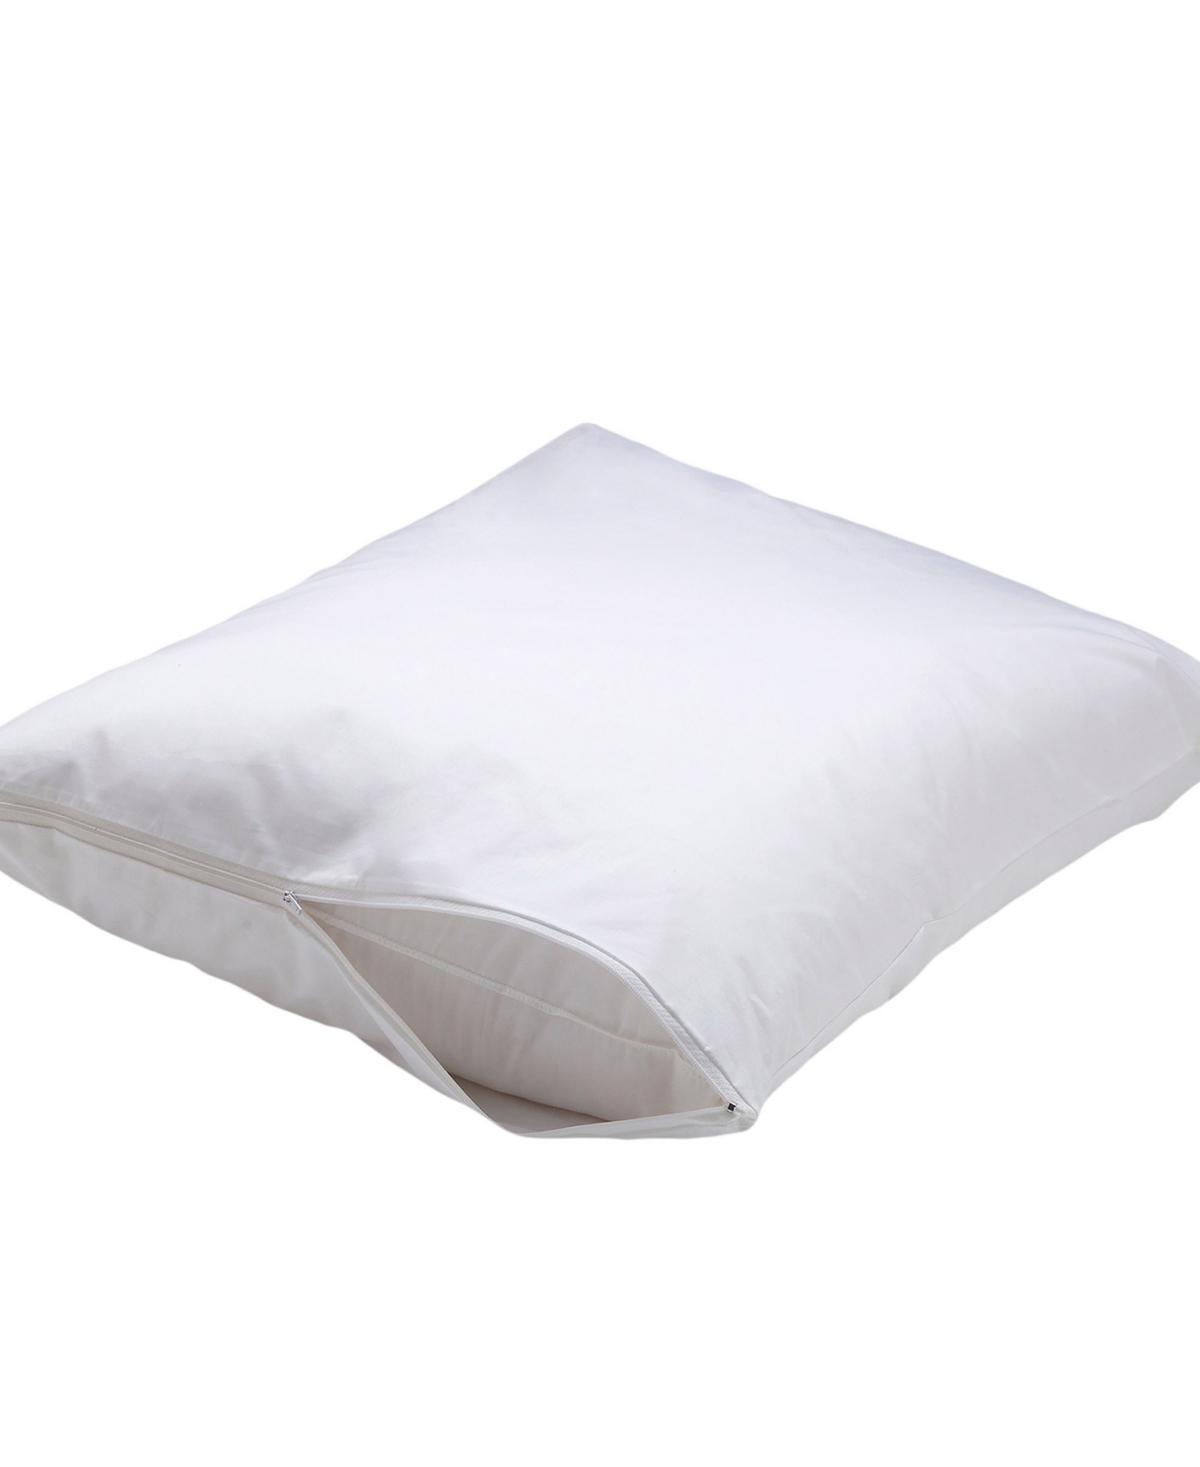 AllerEase Maximum Allergy Protection Standard/Queen Pillow Protector